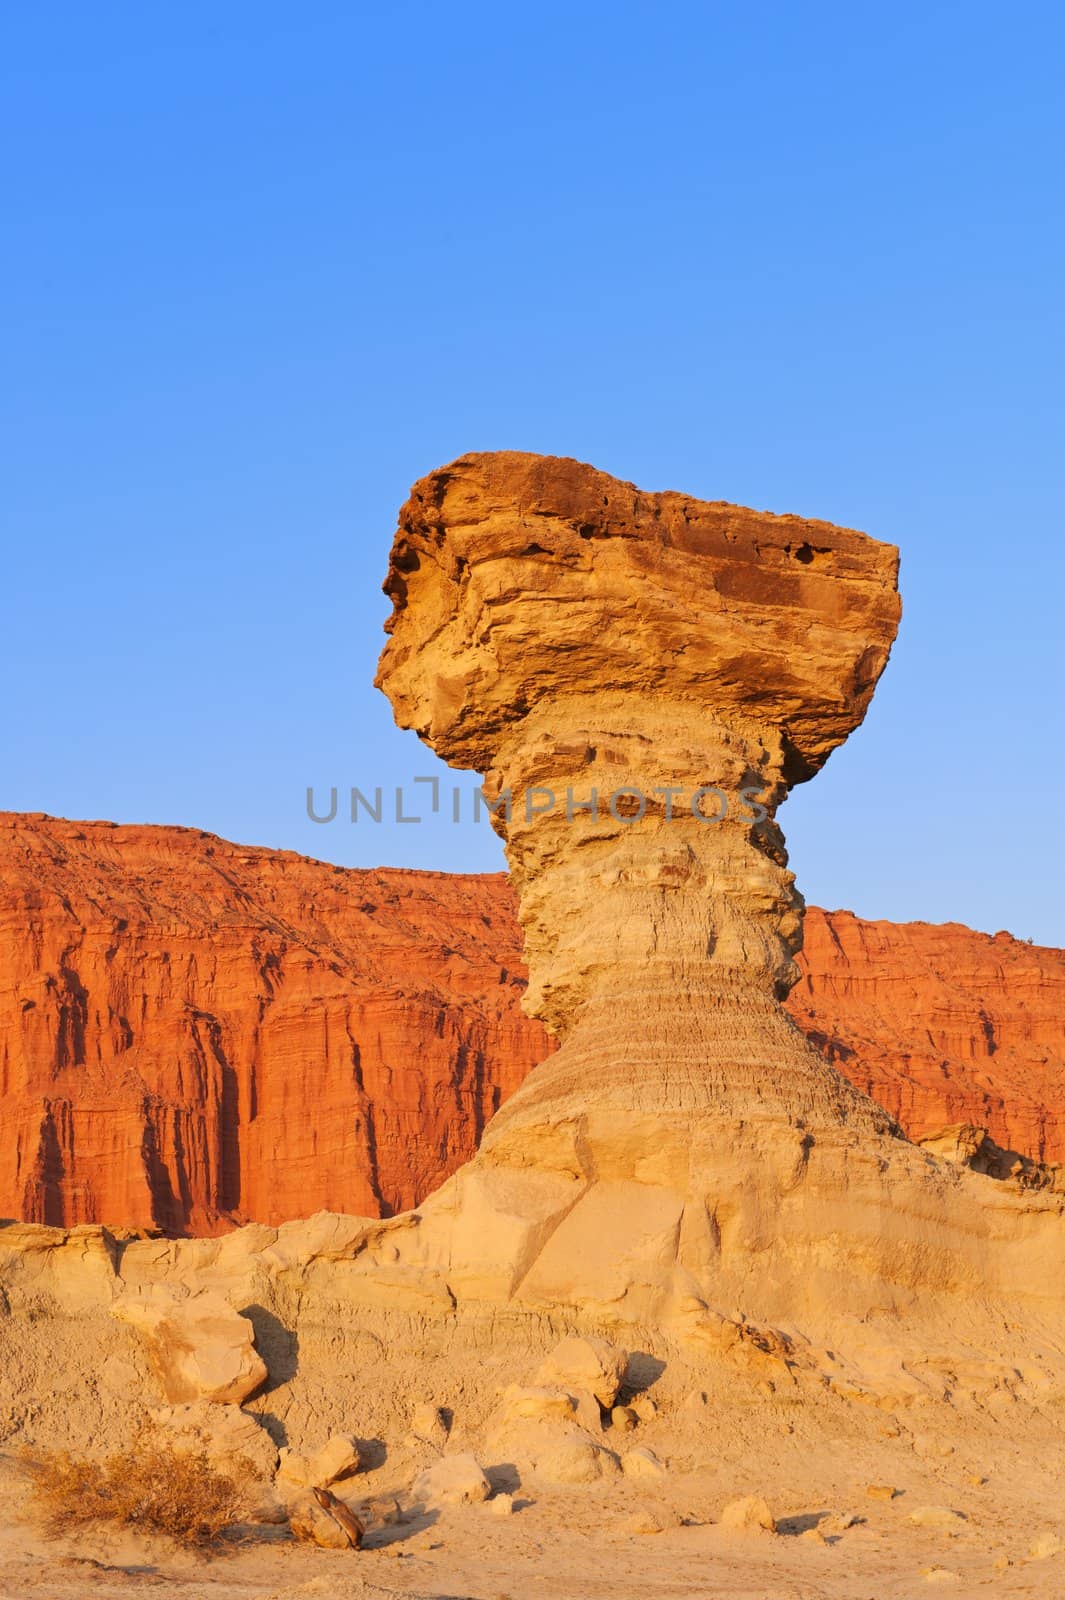 Sandstone formation in Ischigualasto, Argentina, the one called "the mushroom". UNESCO world heritage site.